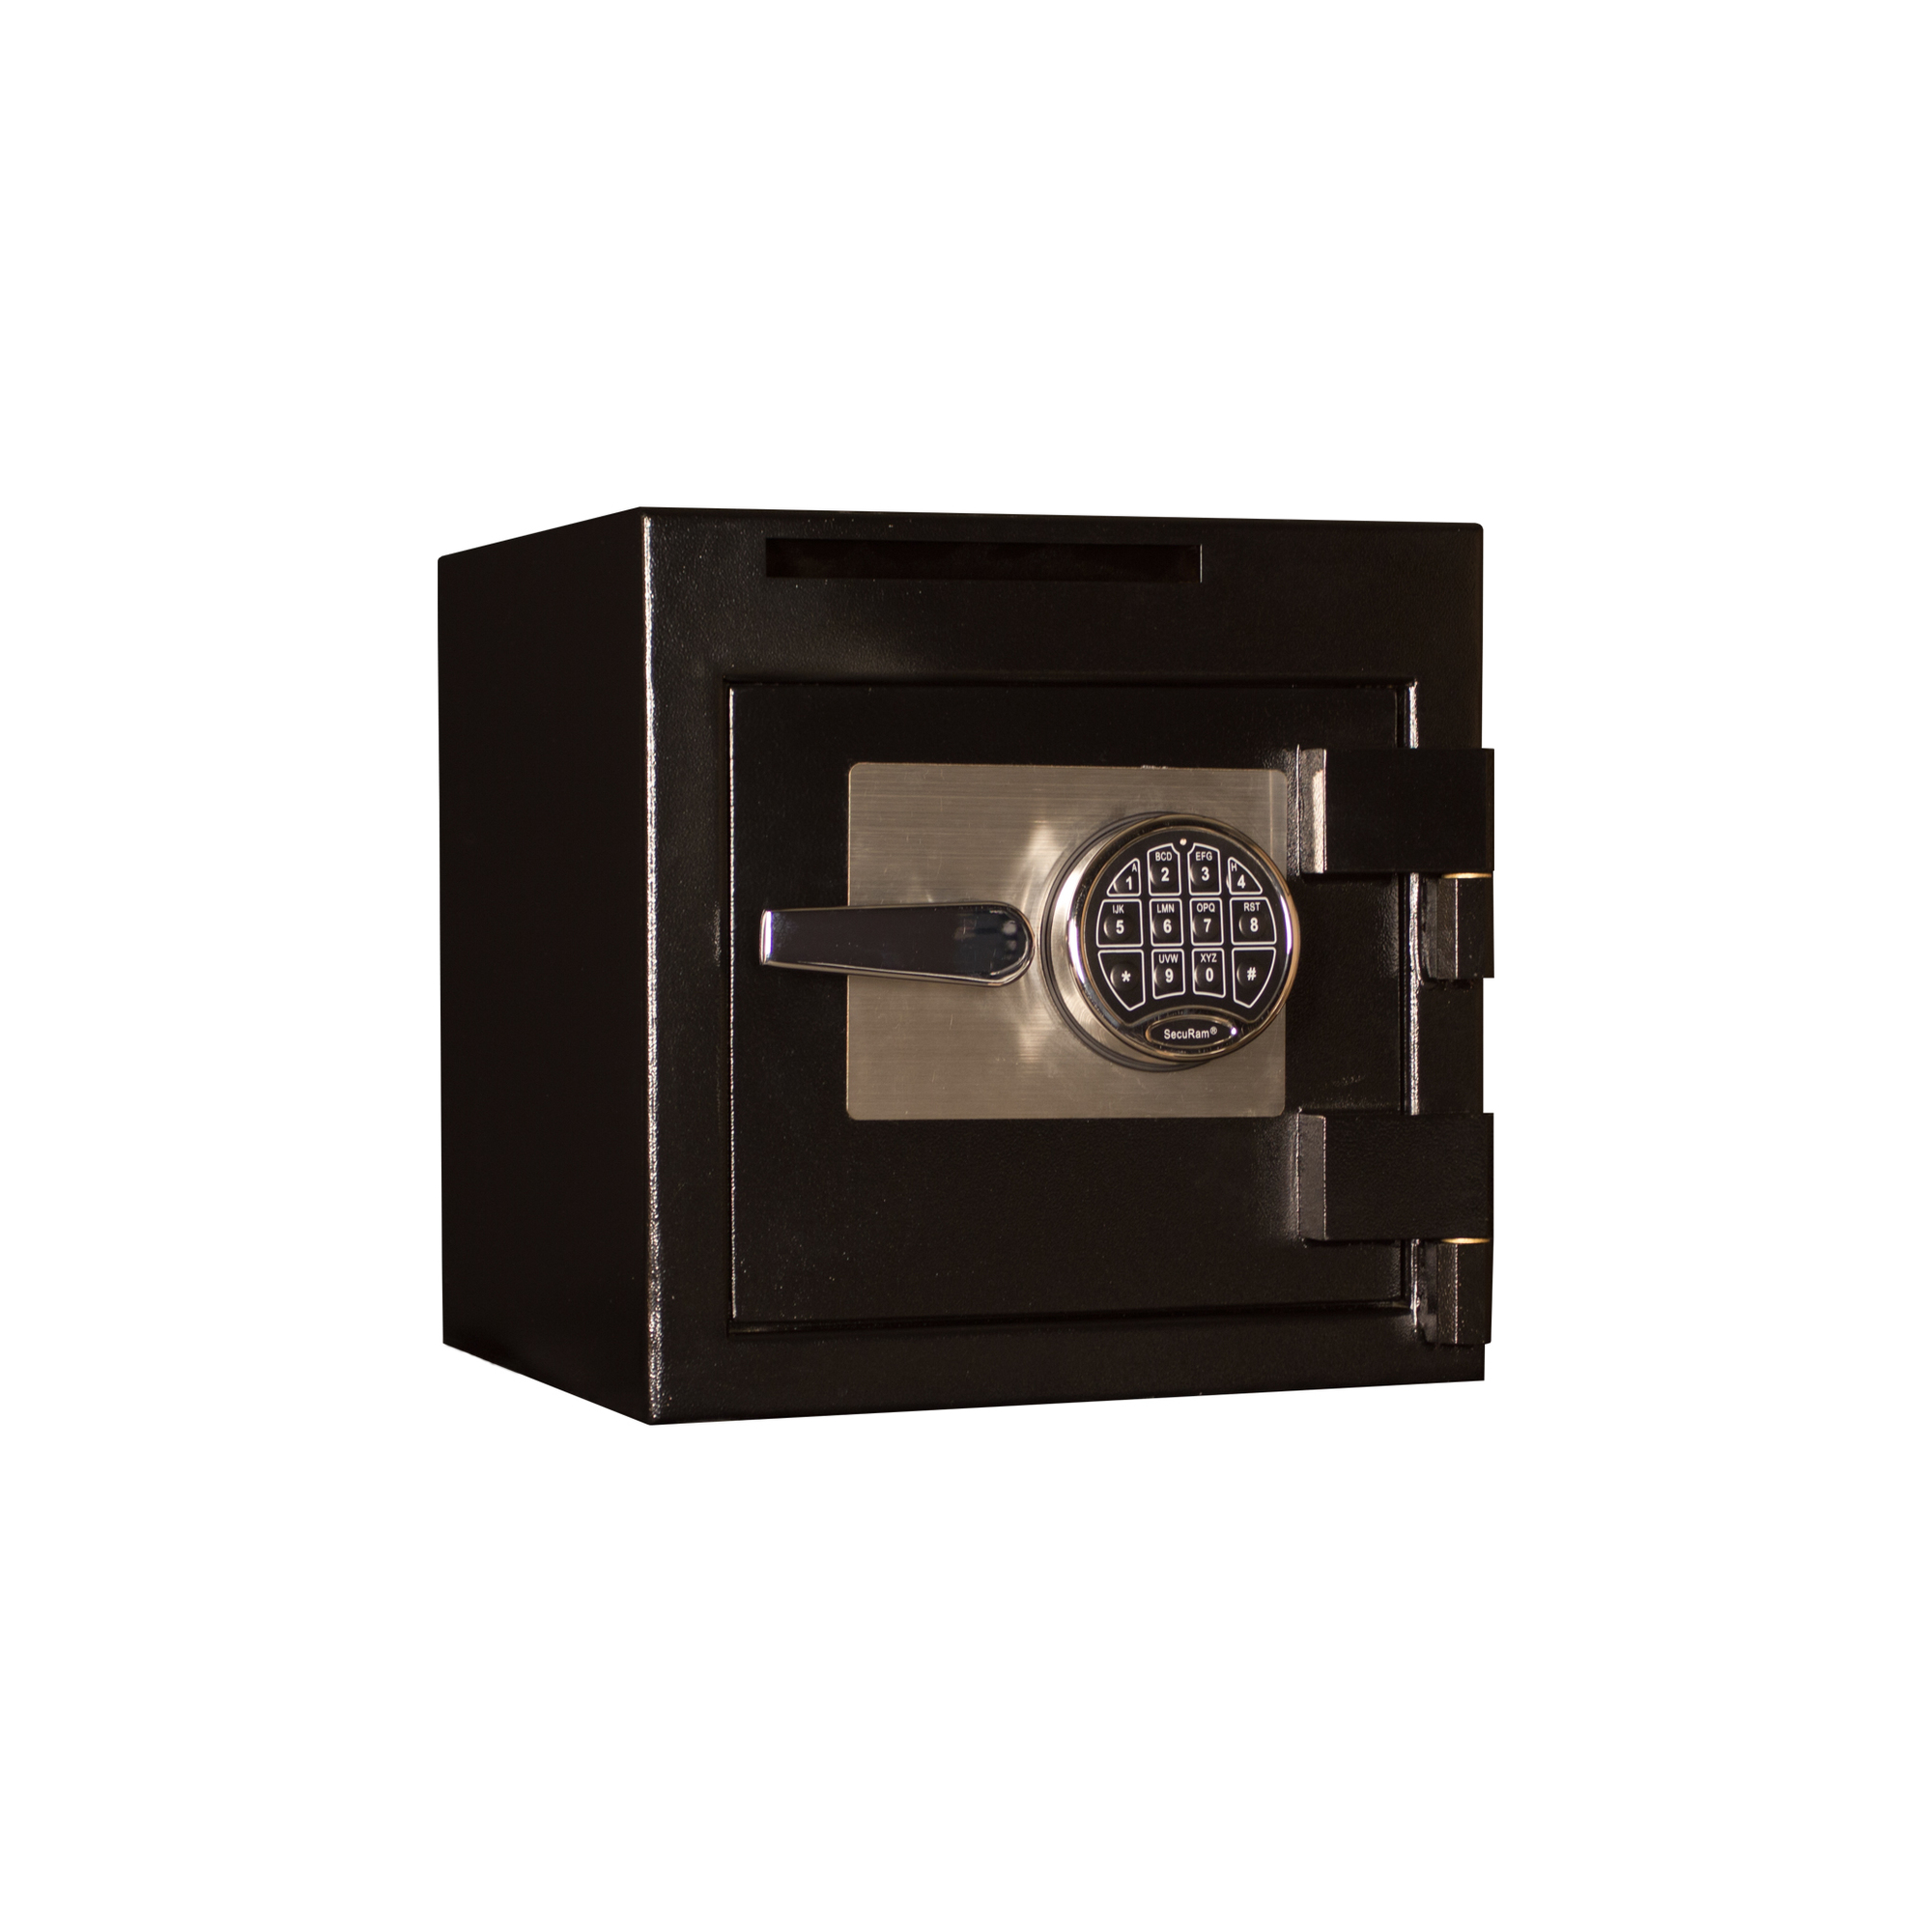 Tracker Safe, 0.90 cu. ft. Deposit Safe Electronic Lock, Lock Type Electronic, Model DS14